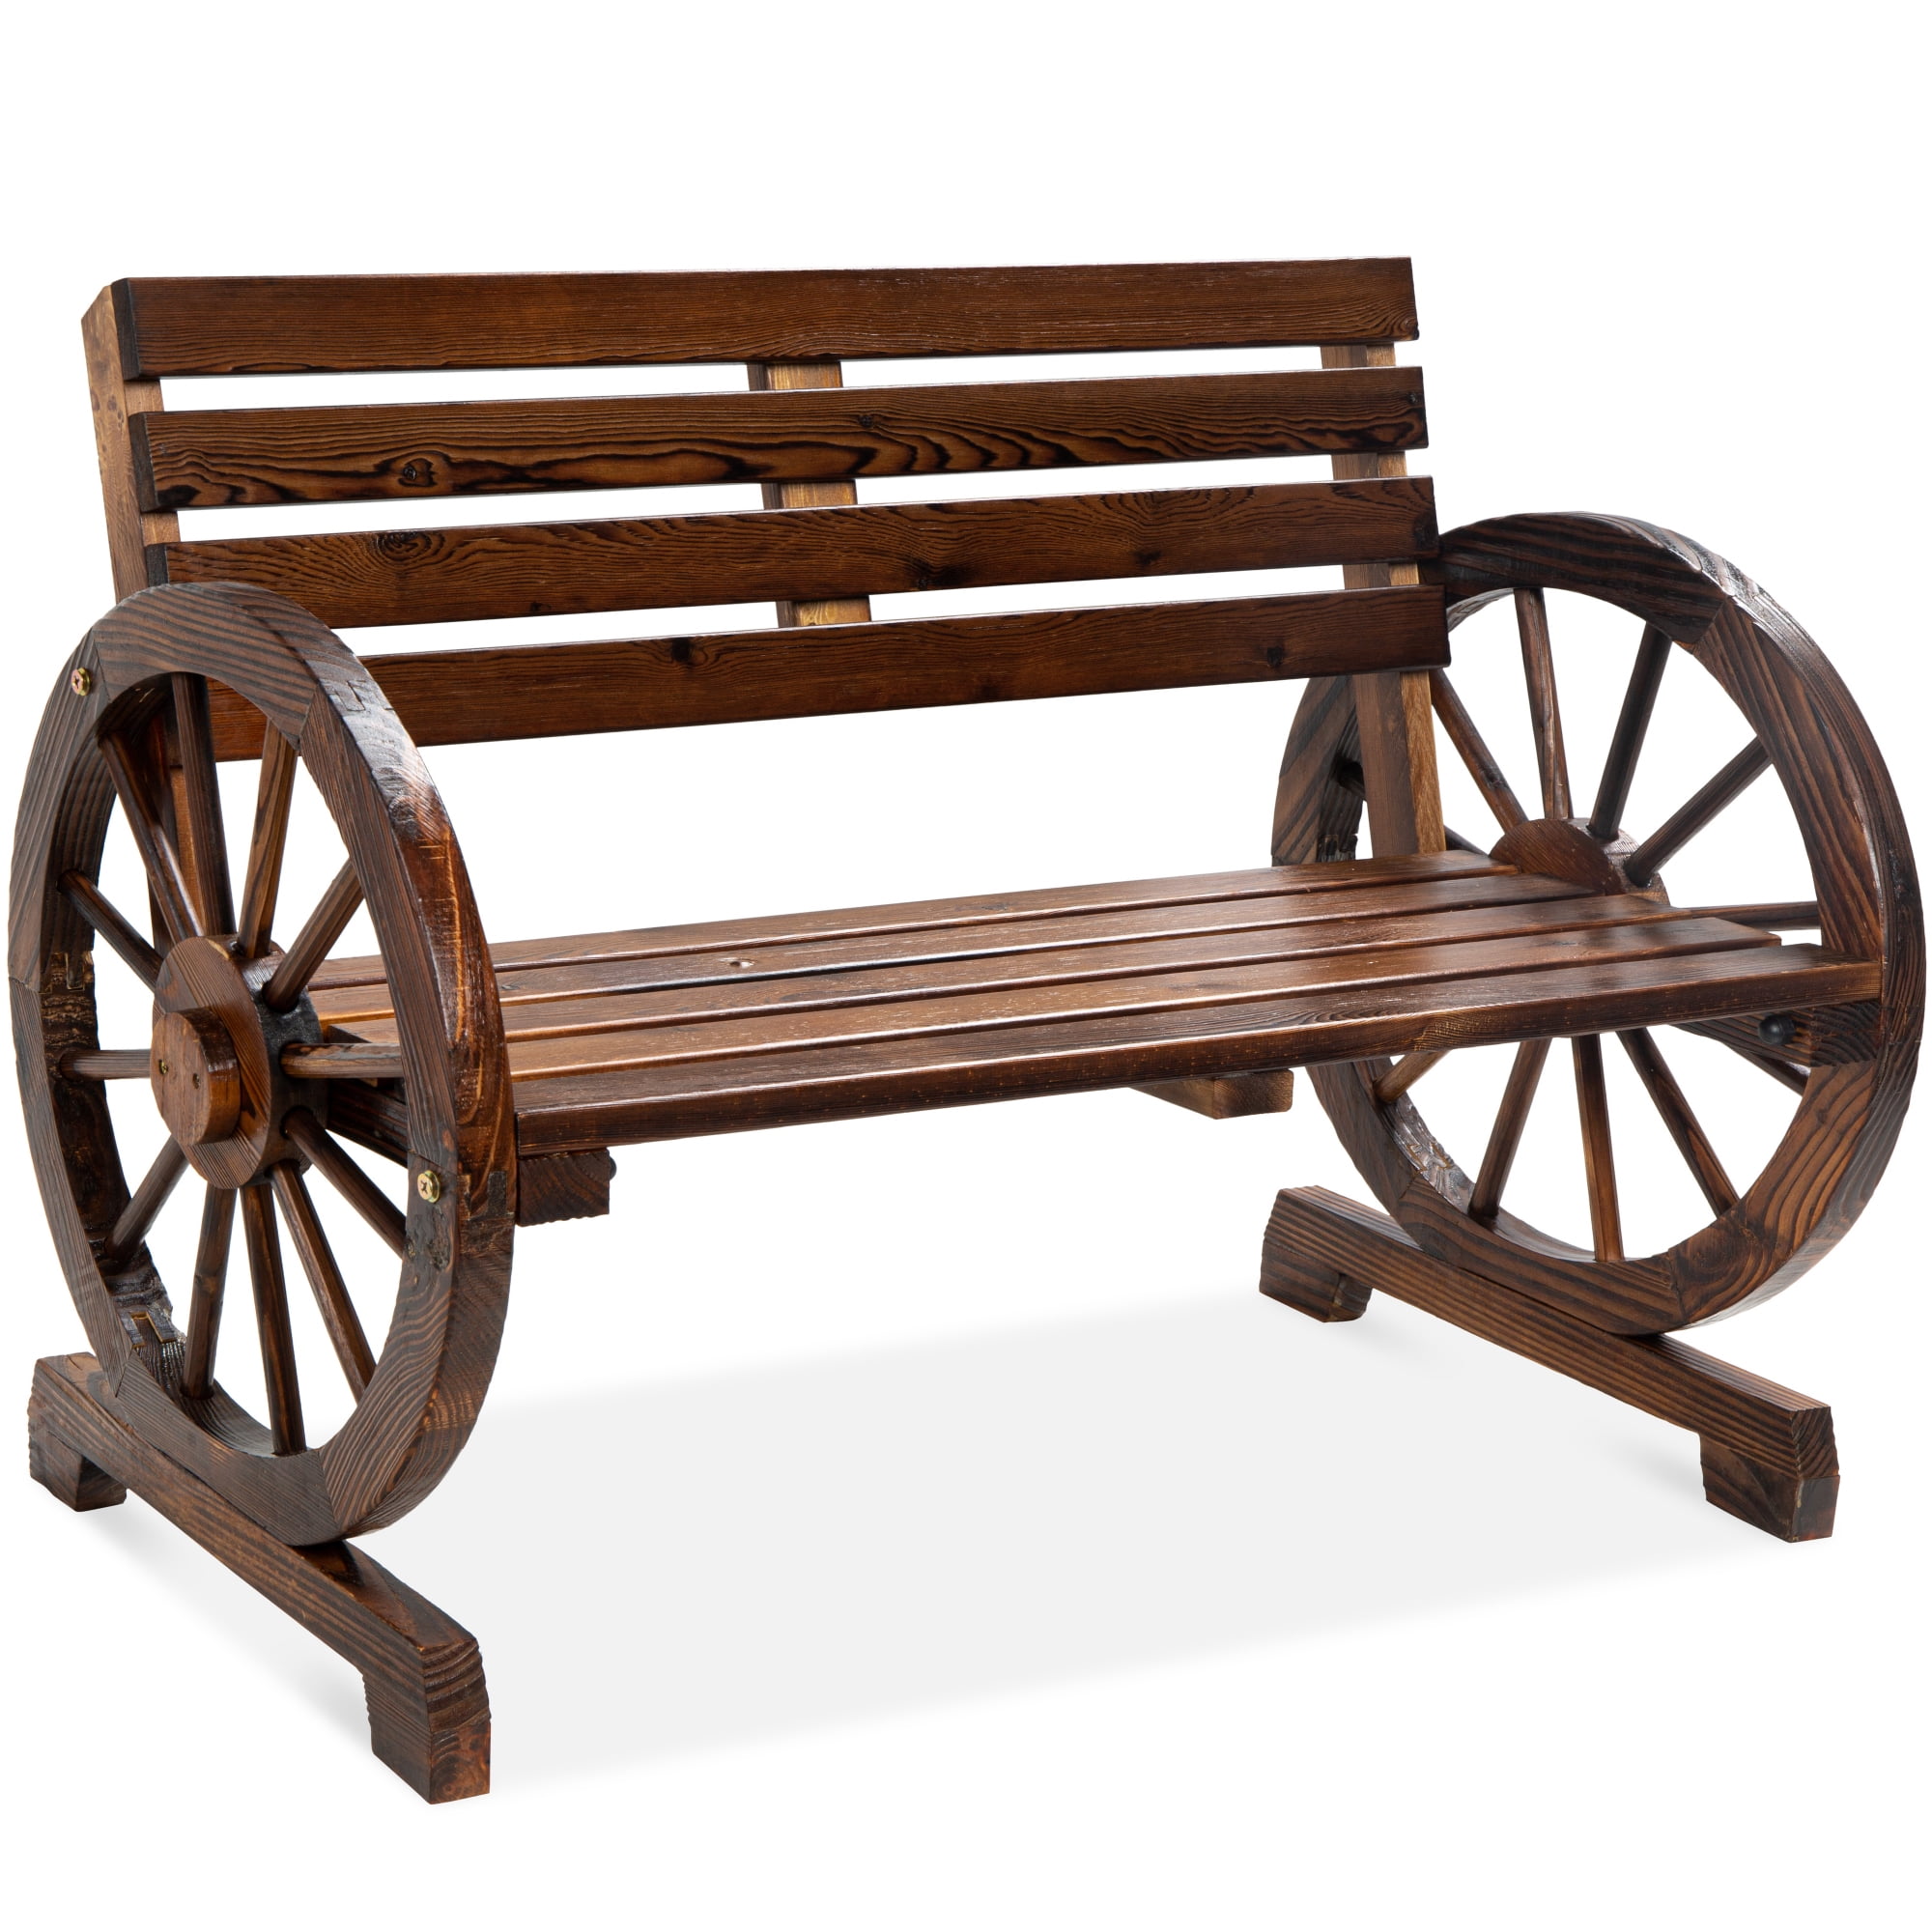 New Wooden Wagon Wheel Bench Garden Loveseat Rustic Outdoor Park Patio Furniture 